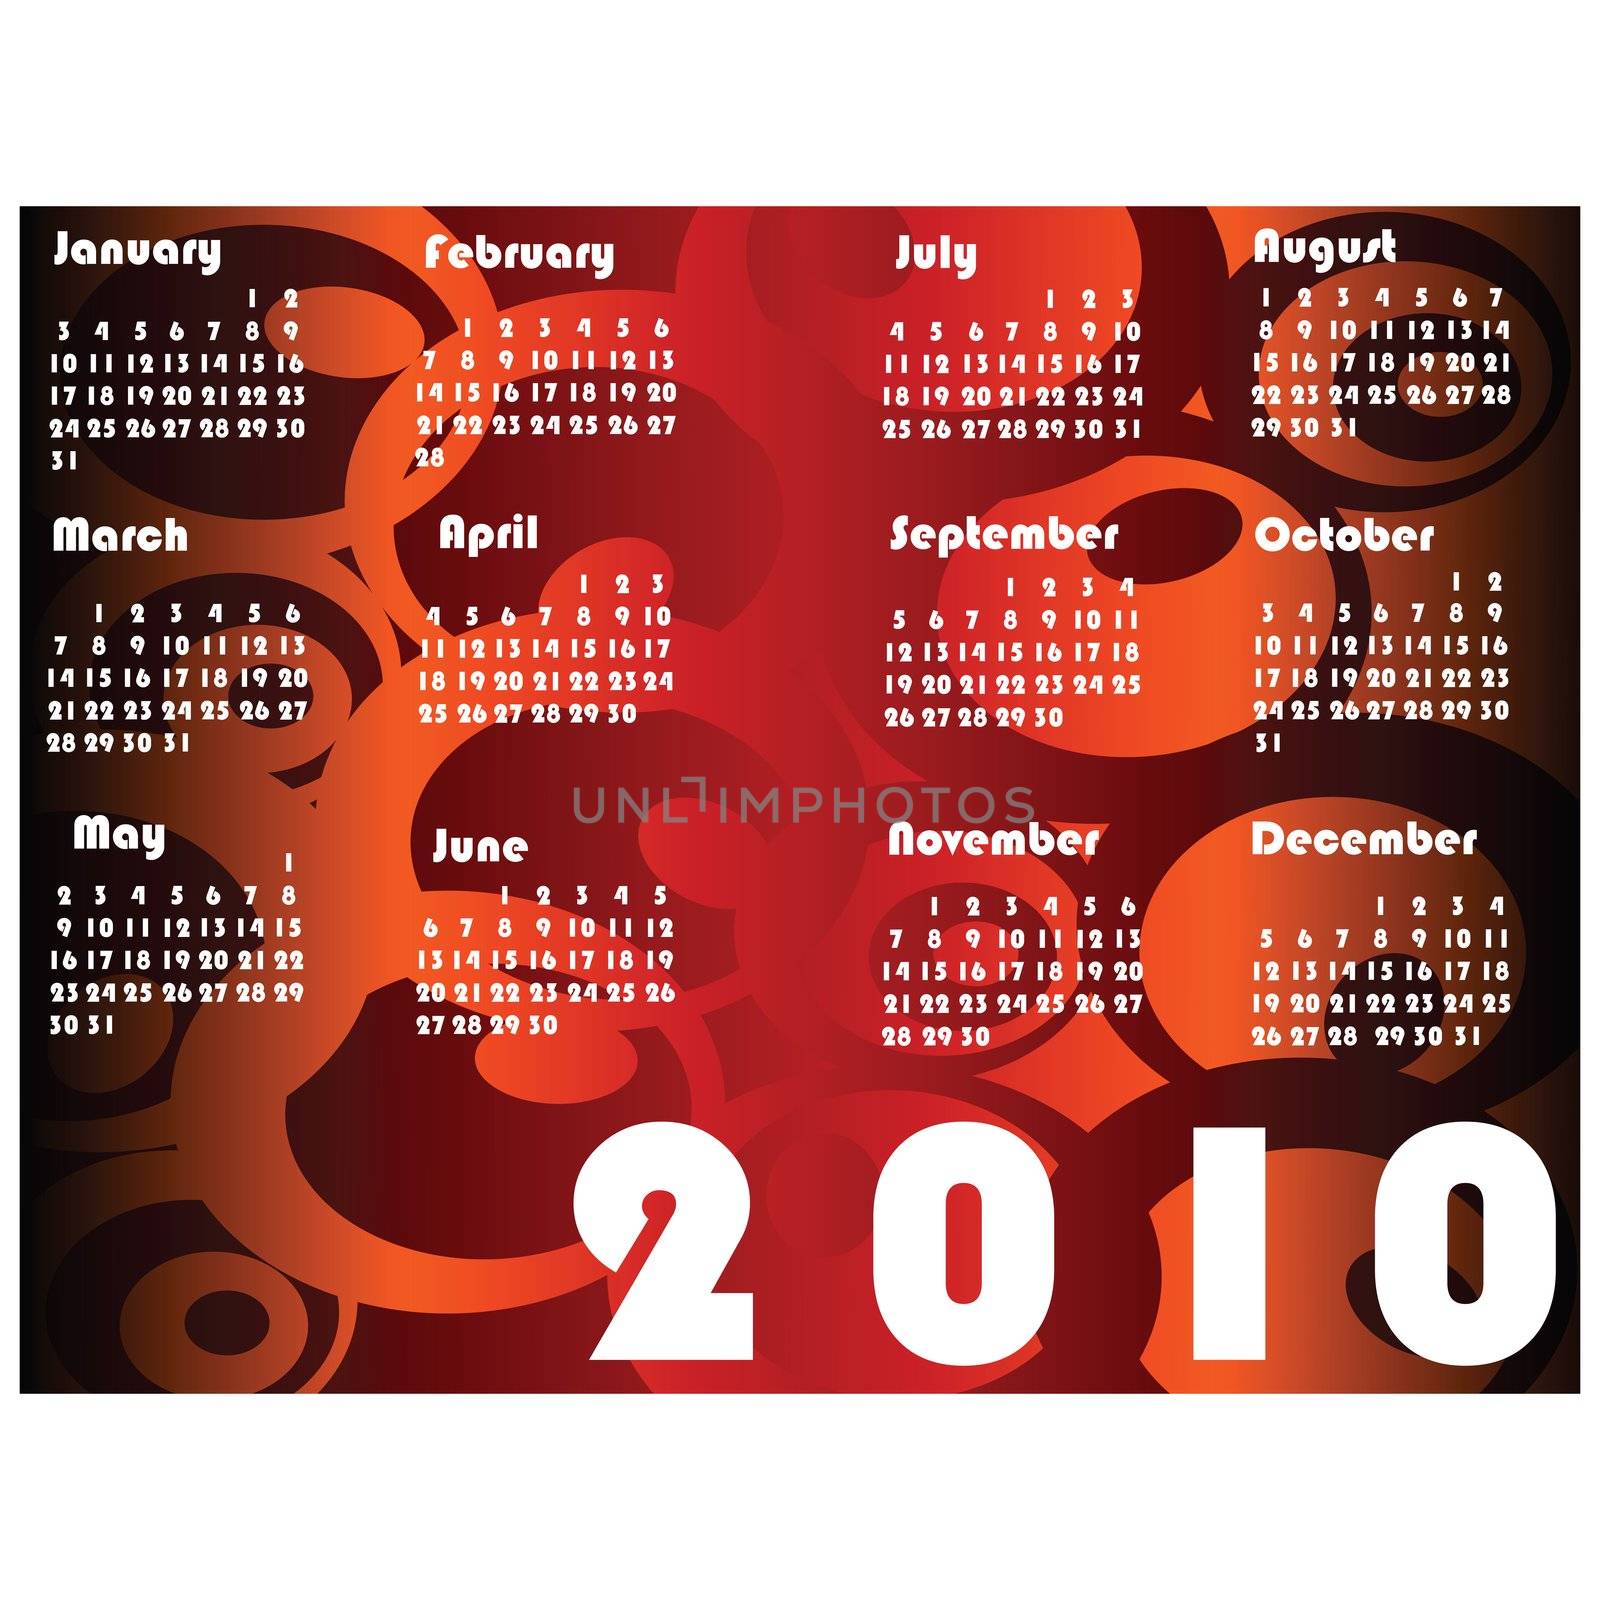 Pocket calendar by Lirch